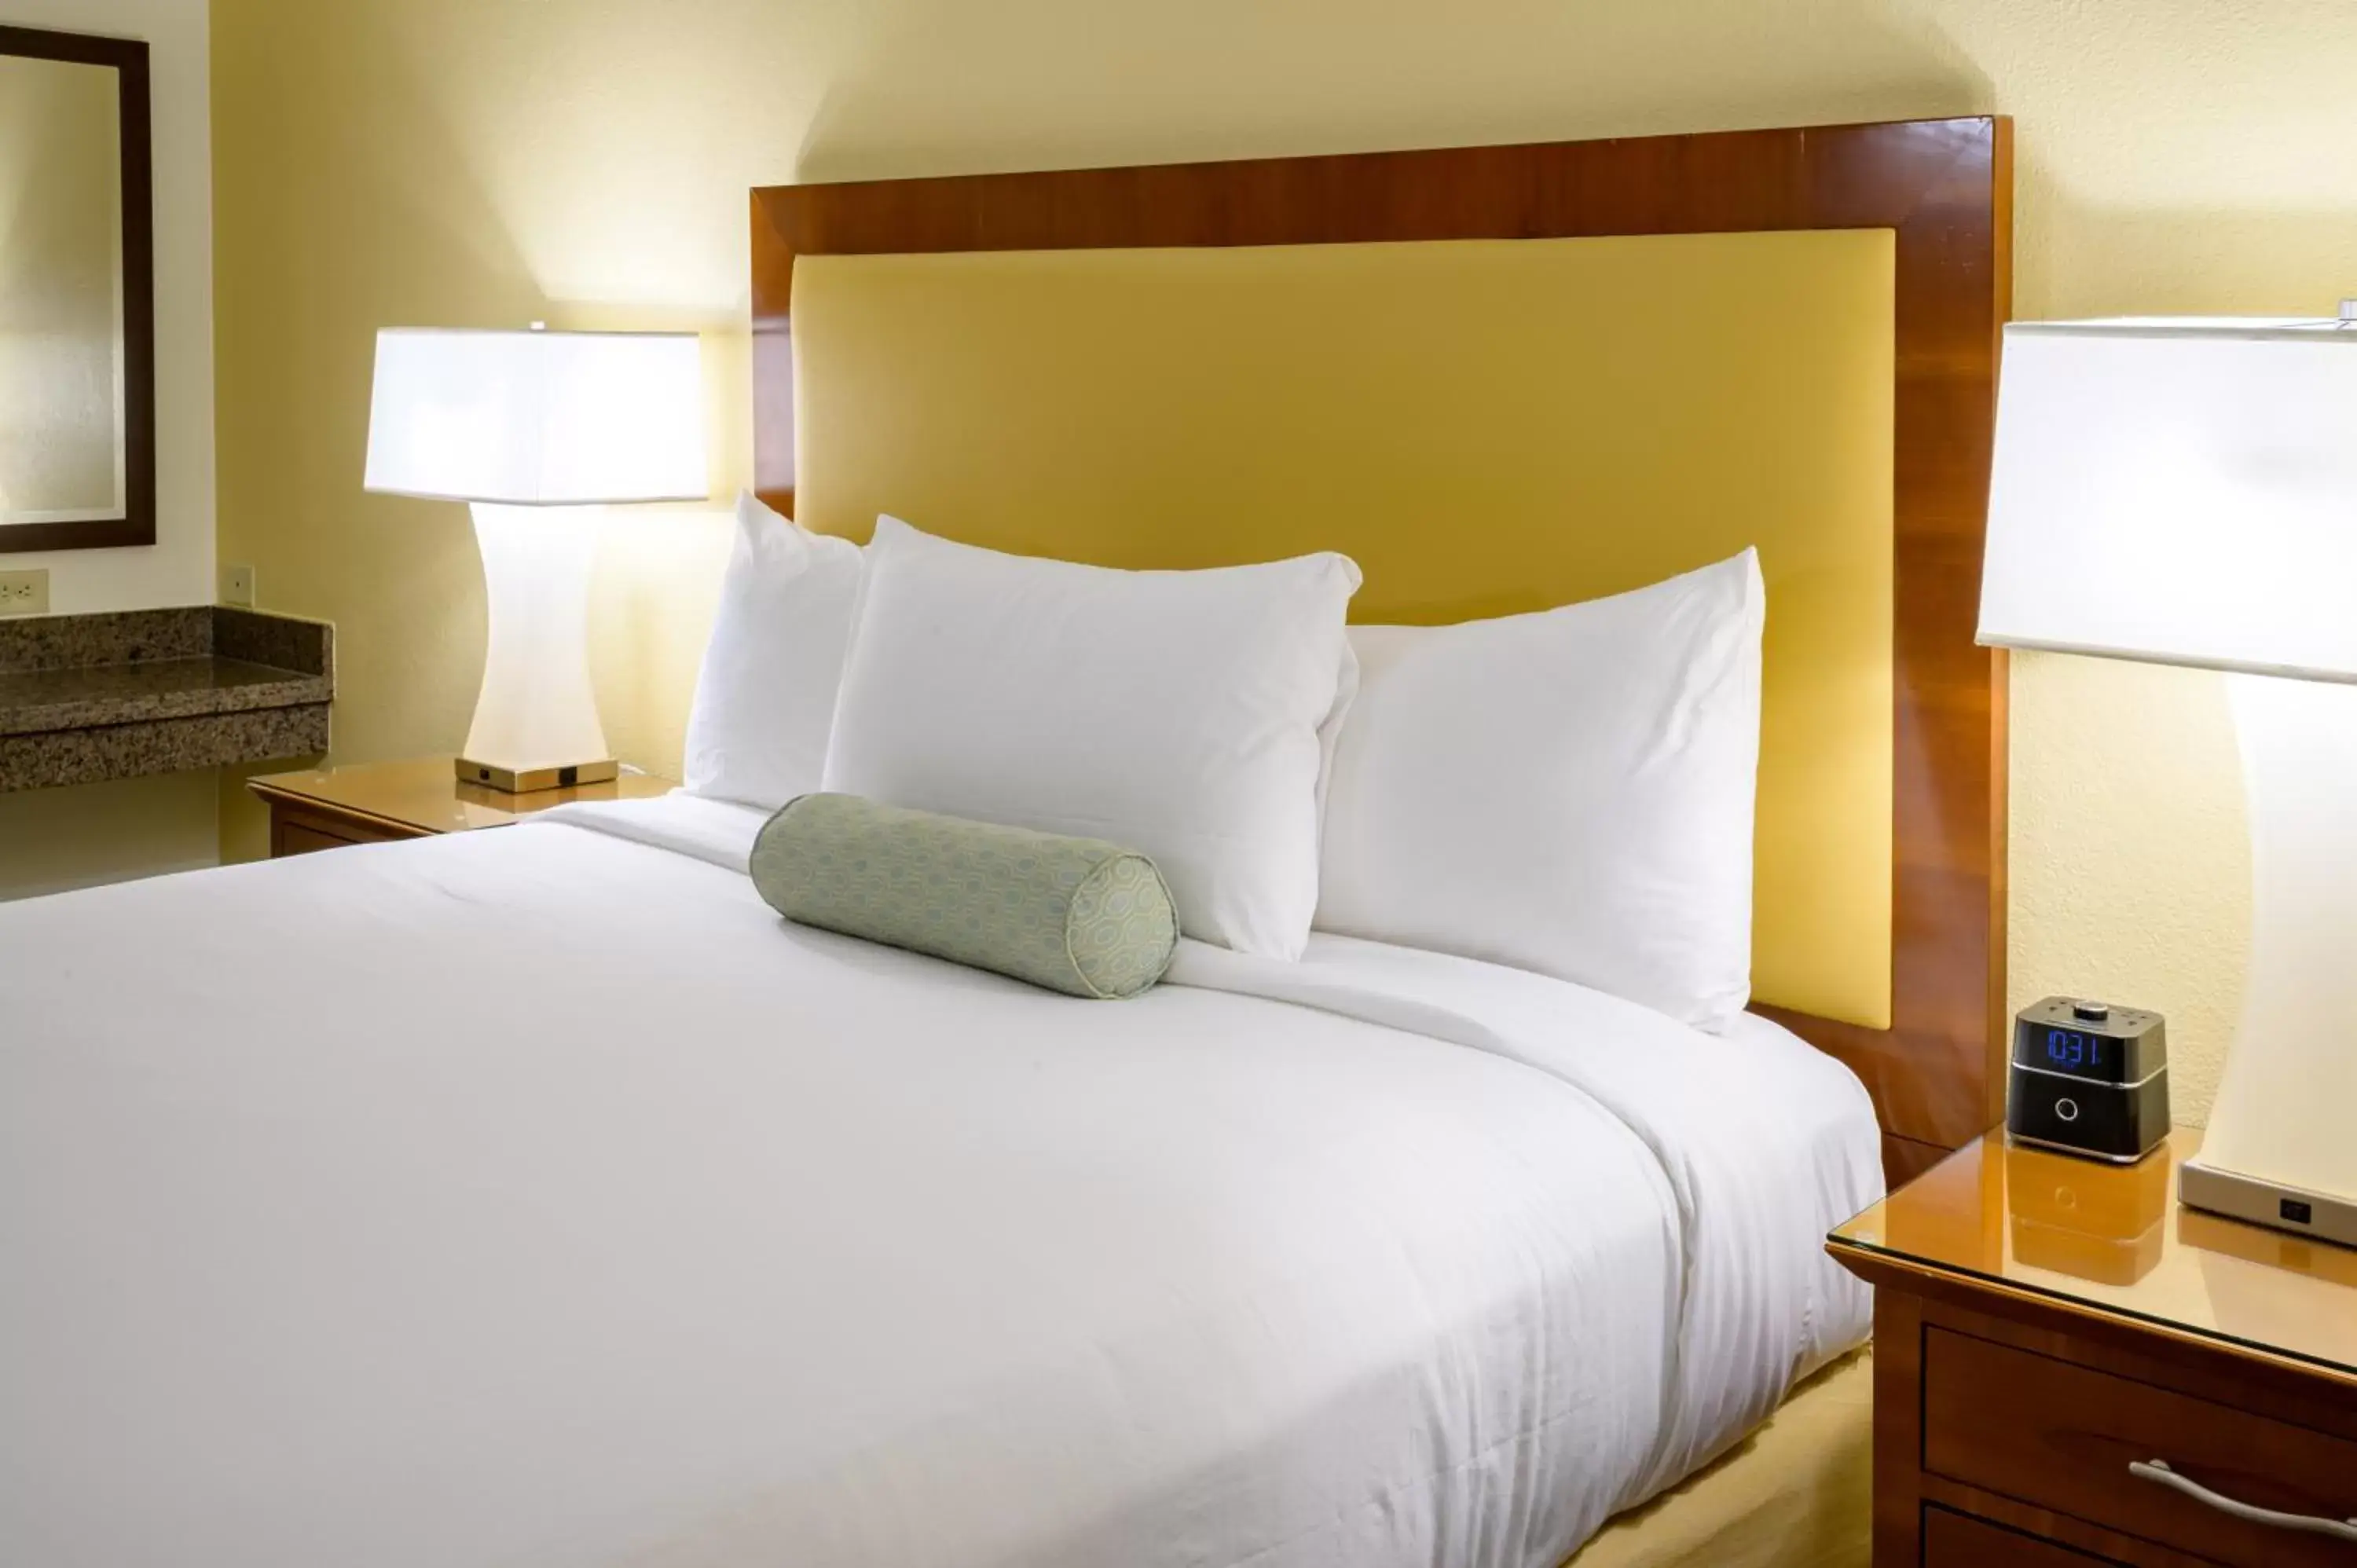 Preferred King - single occupancy in Airtel Plaza Hotel